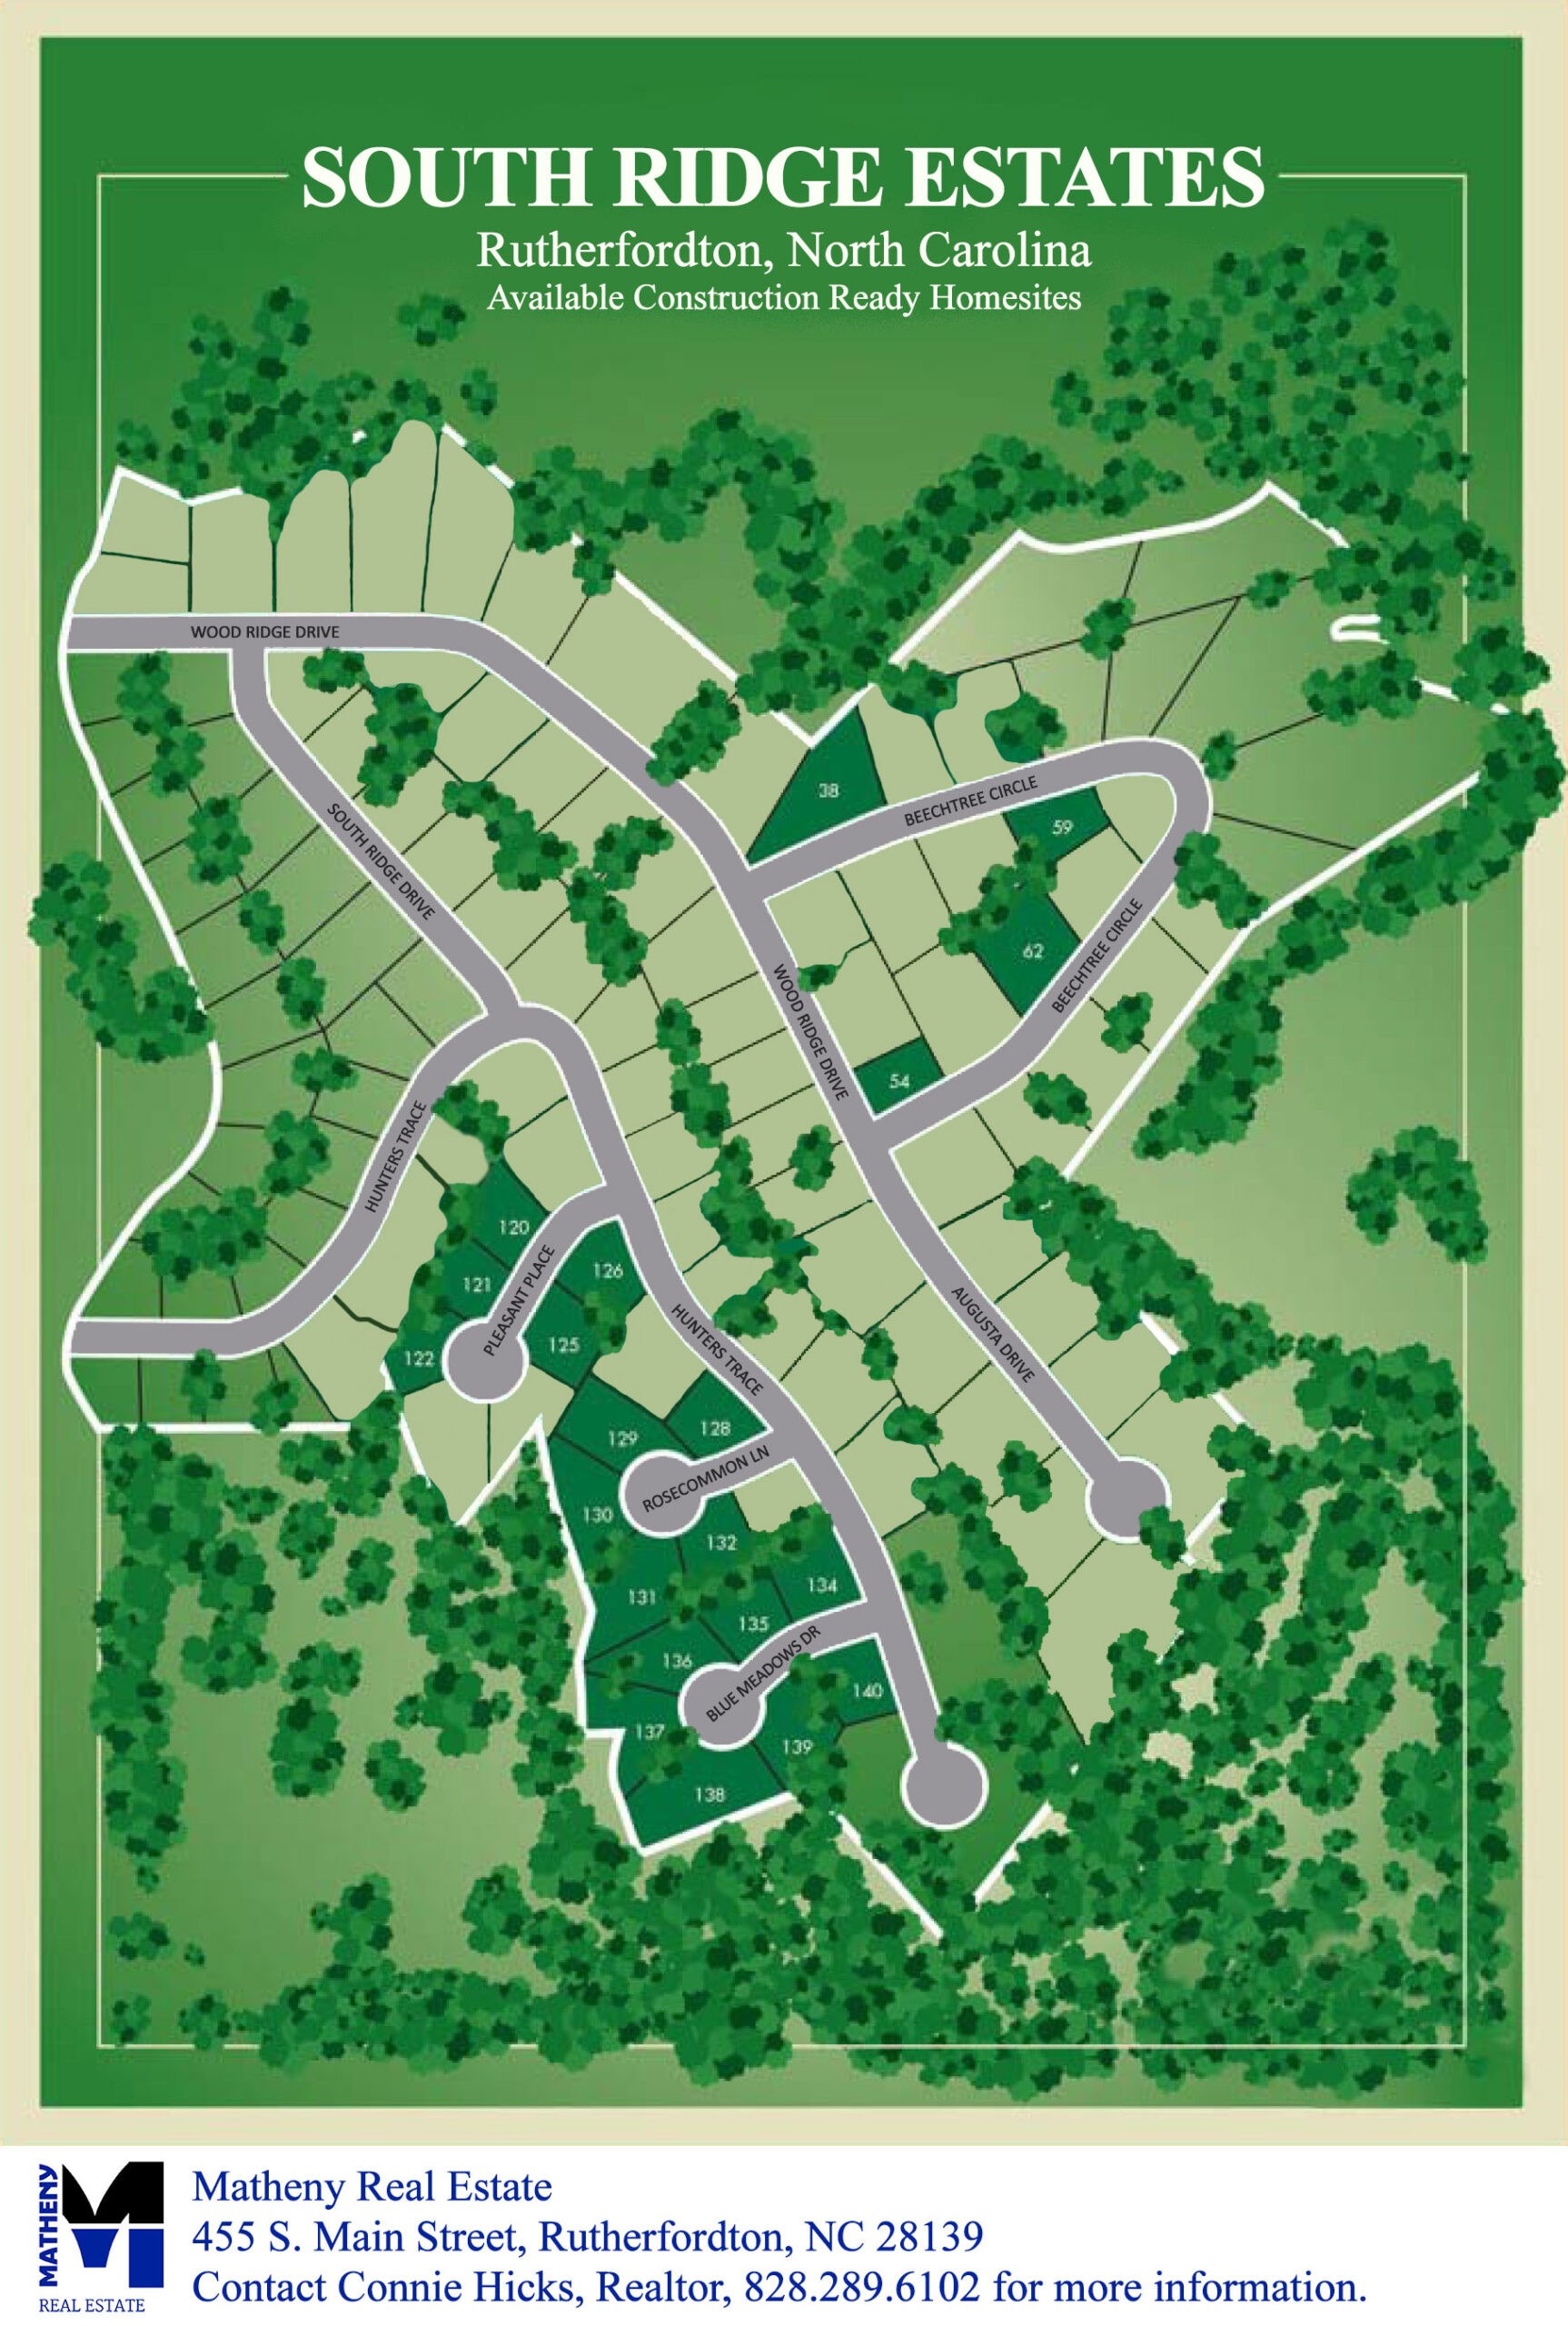 South Ridge Estates Homesite Map